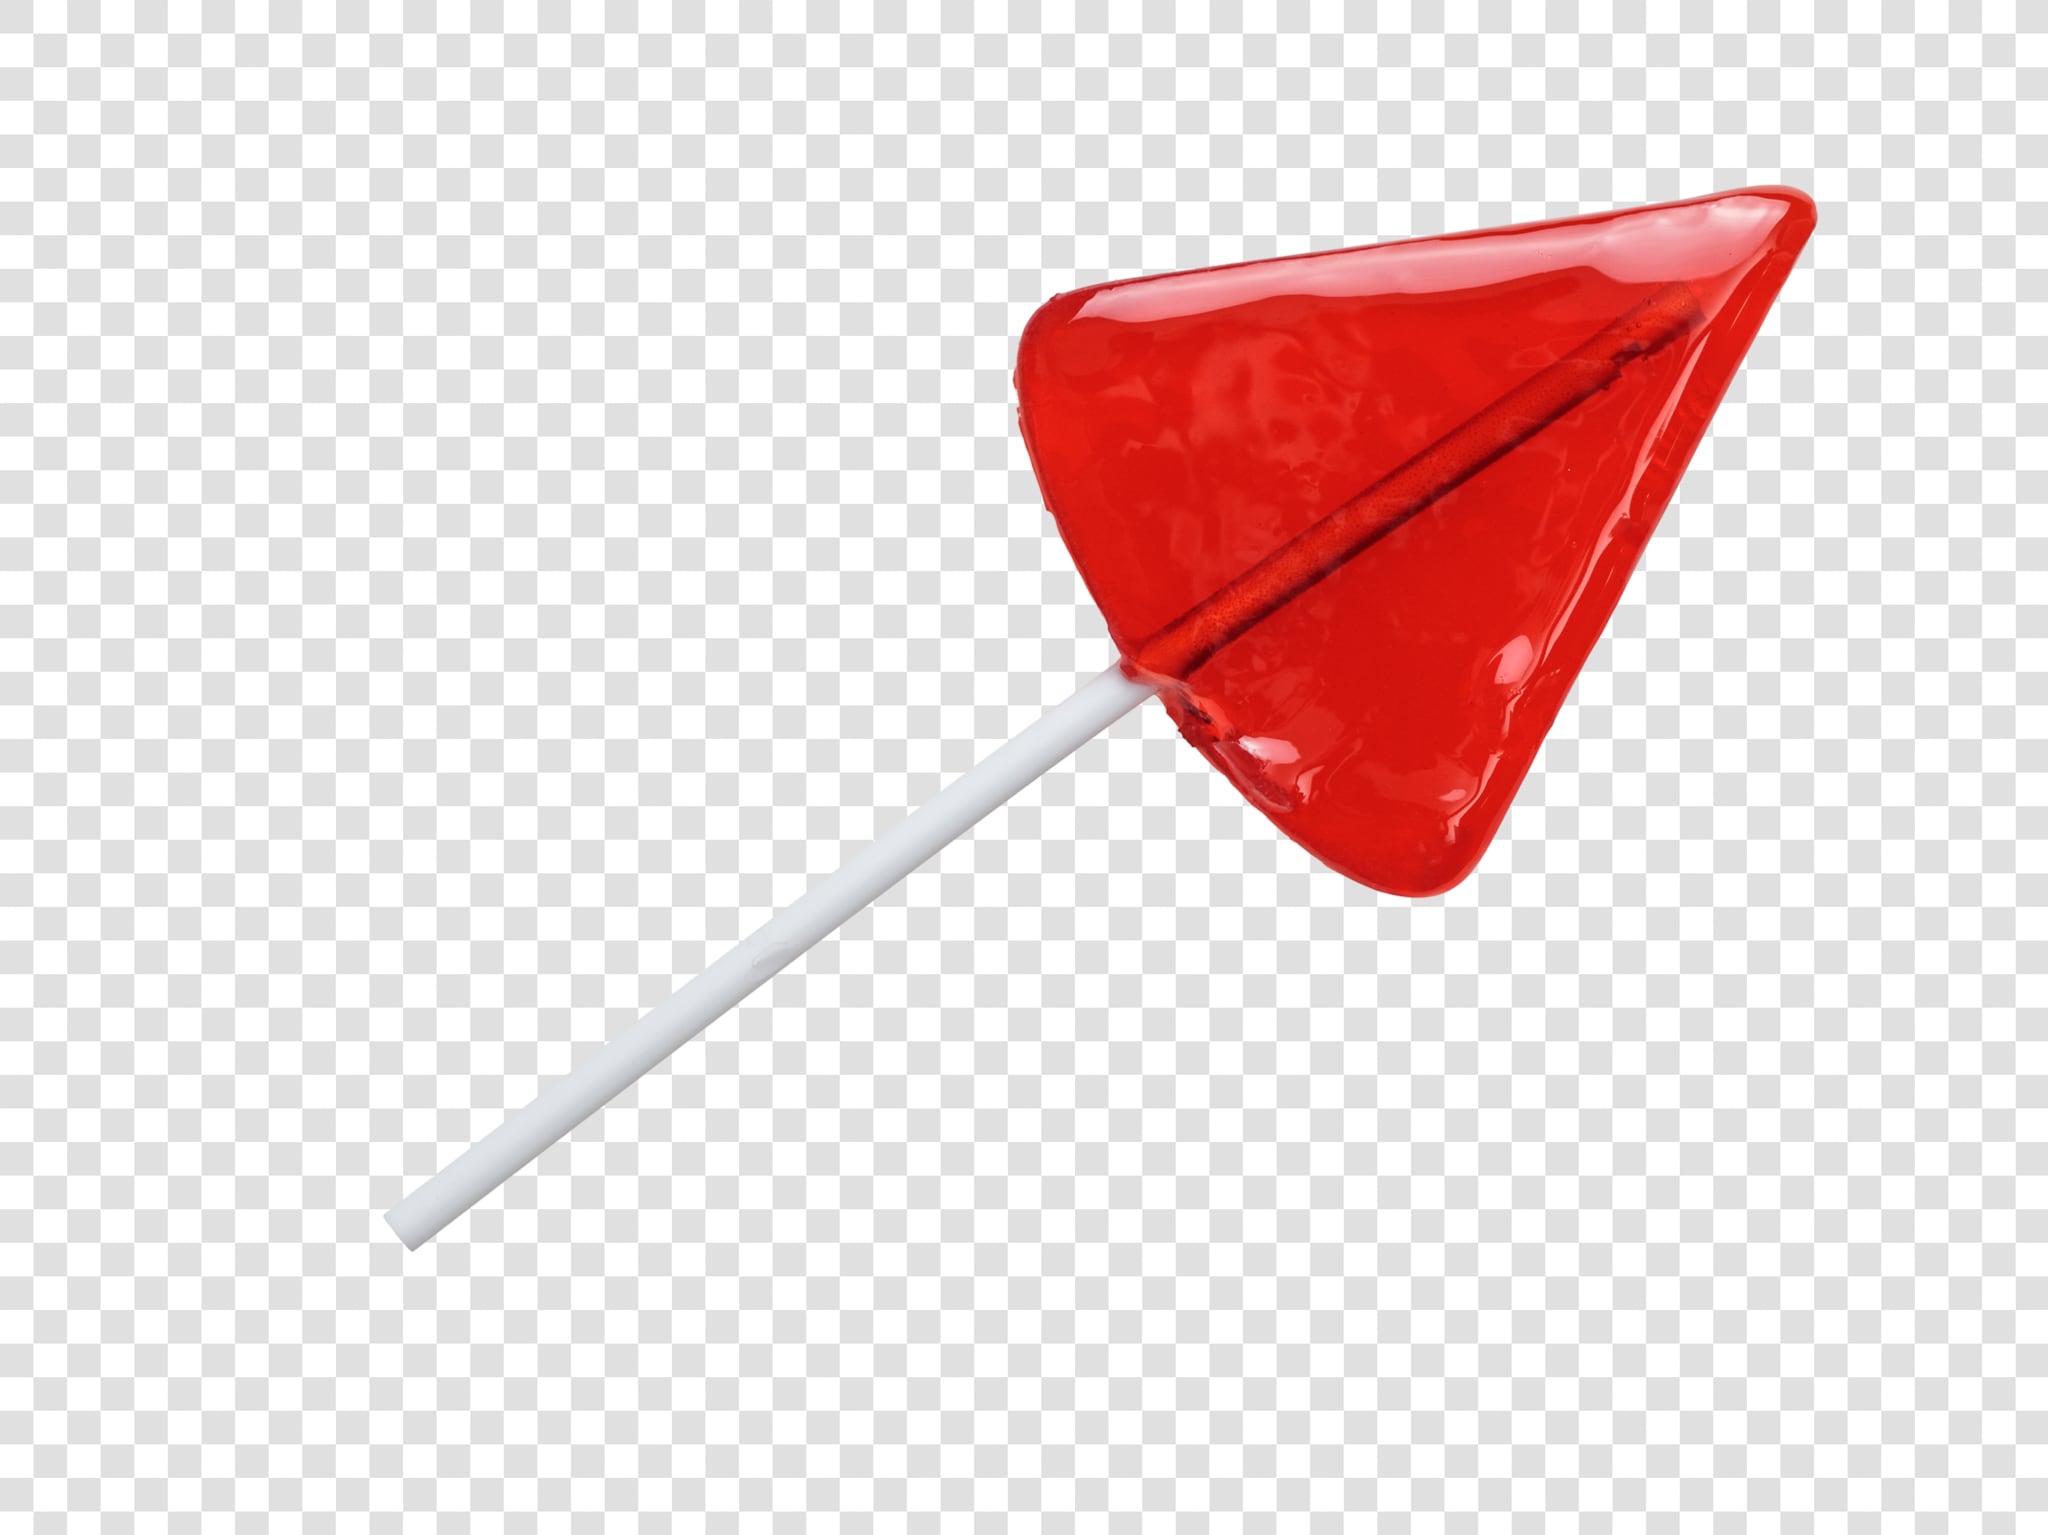 Lollipop image with transparent background